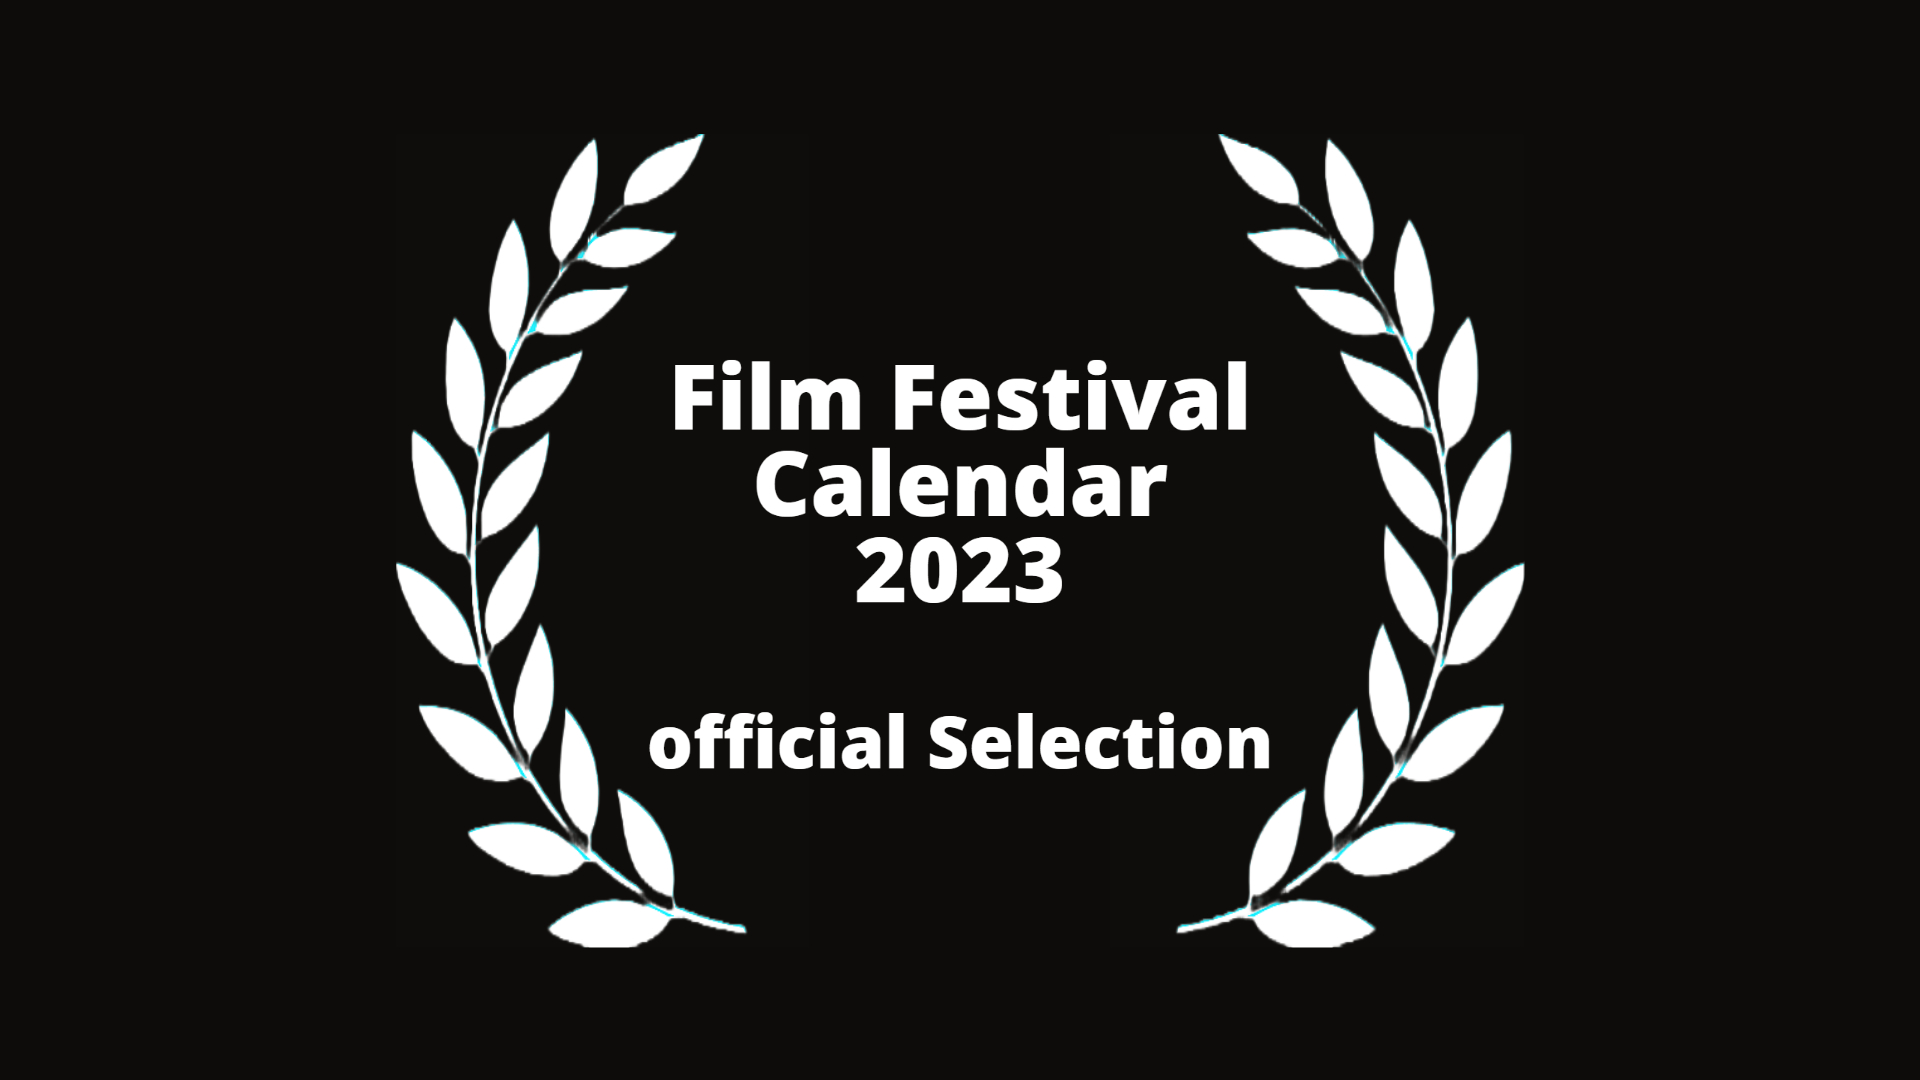 Complete Film Festival Calendar 2023 Mr. Movie DNA